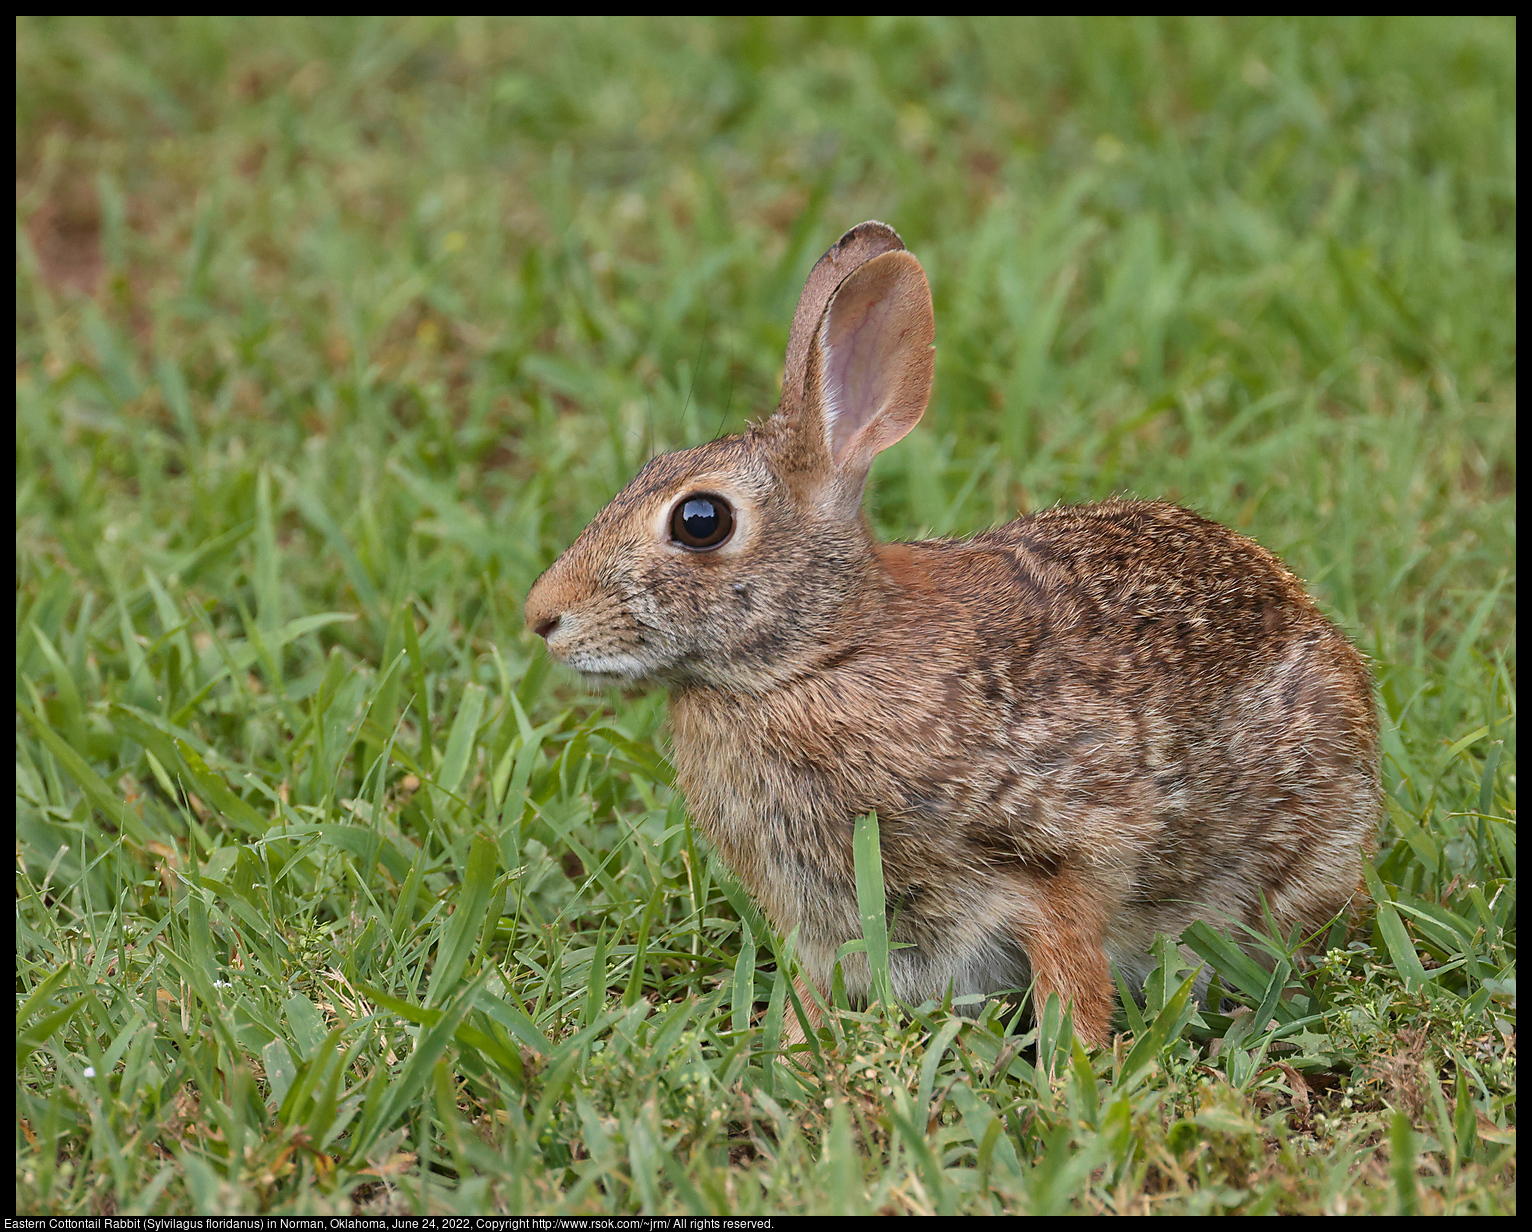 Eastern Cottontail Rabbit (Sylvilagus floridanus) in Norman, Oklahoma, June 24, 2022